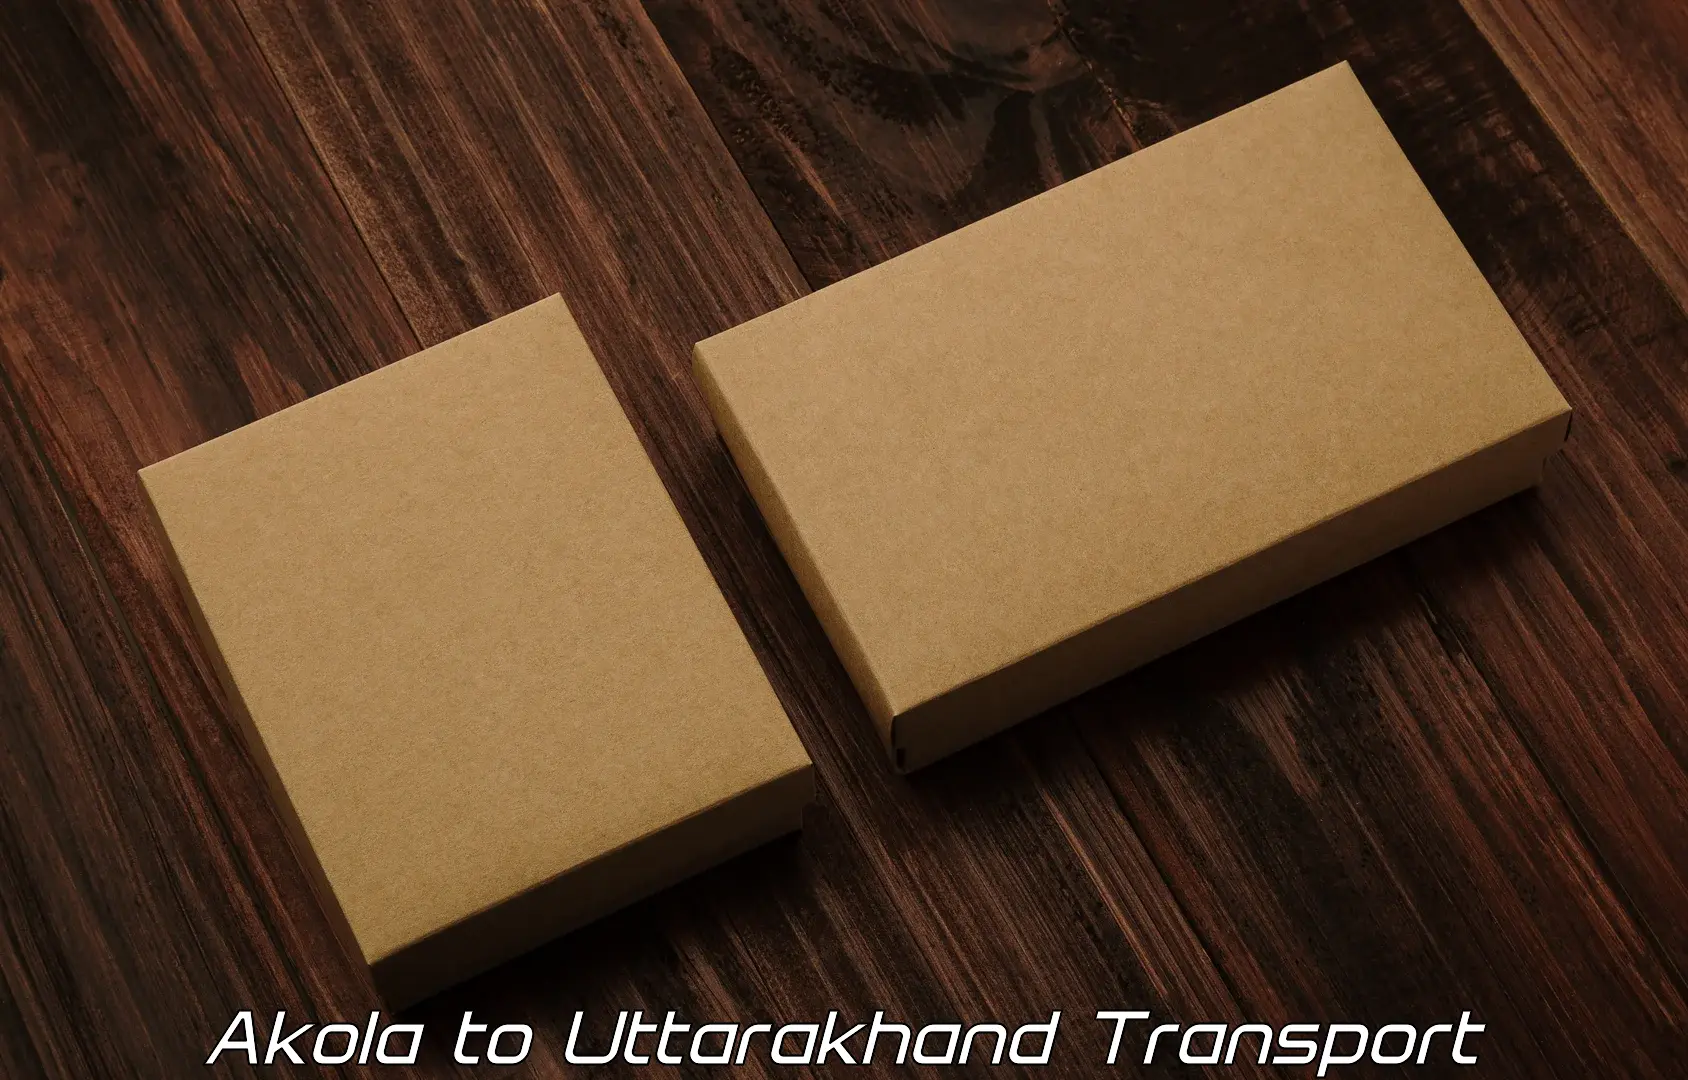 Delivery service Akola to Pithoragarh